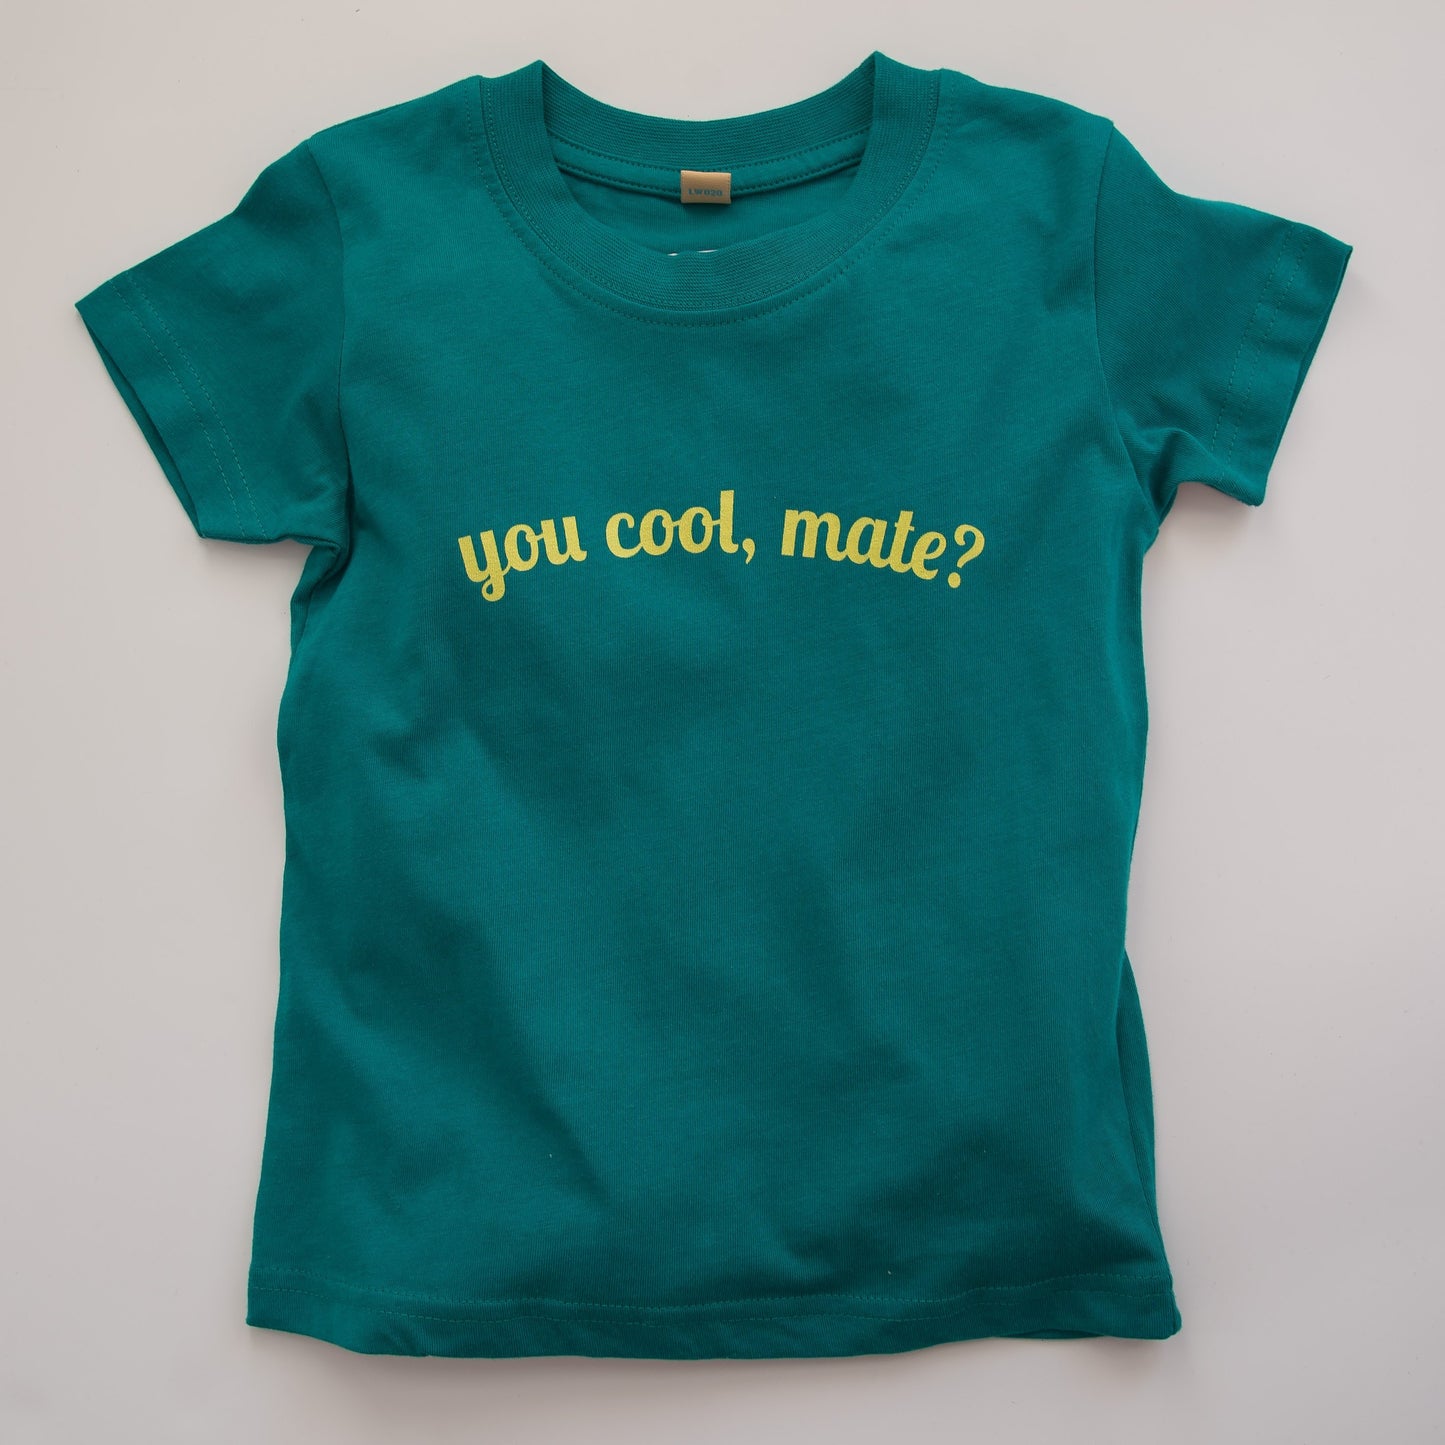 YOU COOL, MATE? - Short Sleeve Toddler T Shirt - Little Mate Adventures 